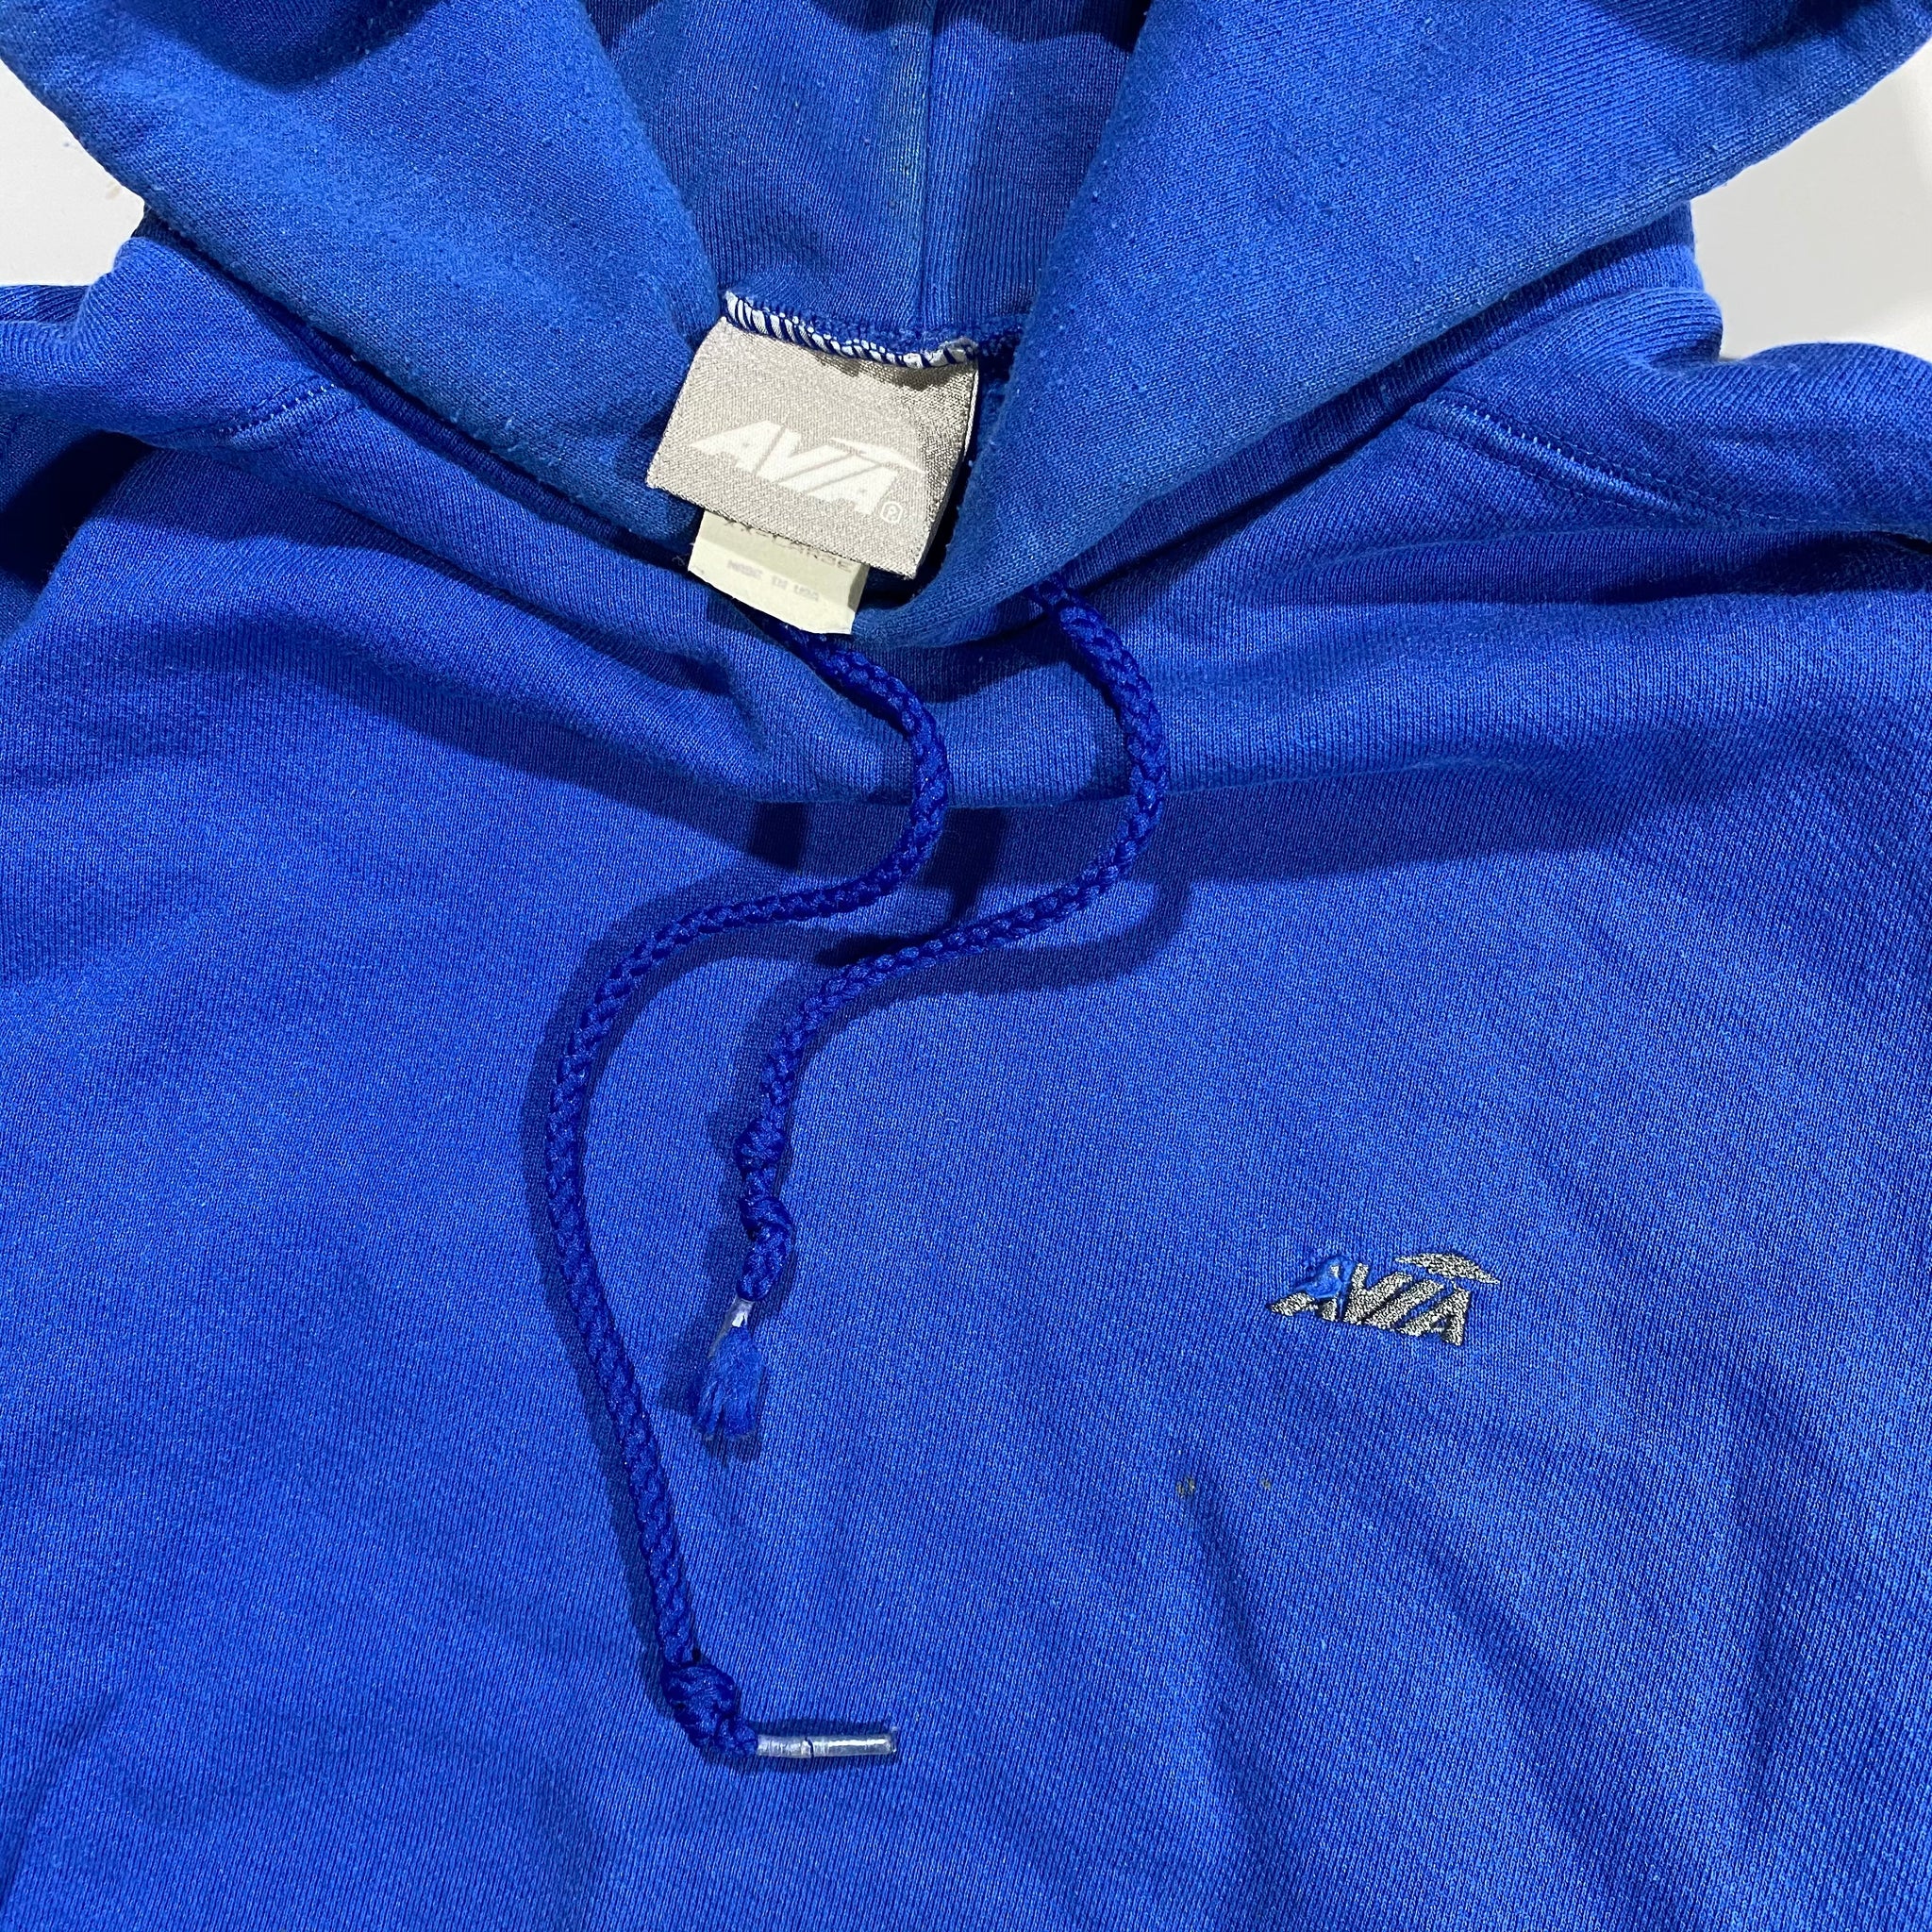 90s Avia hoodie. Made in usa🇺🇸 XXL